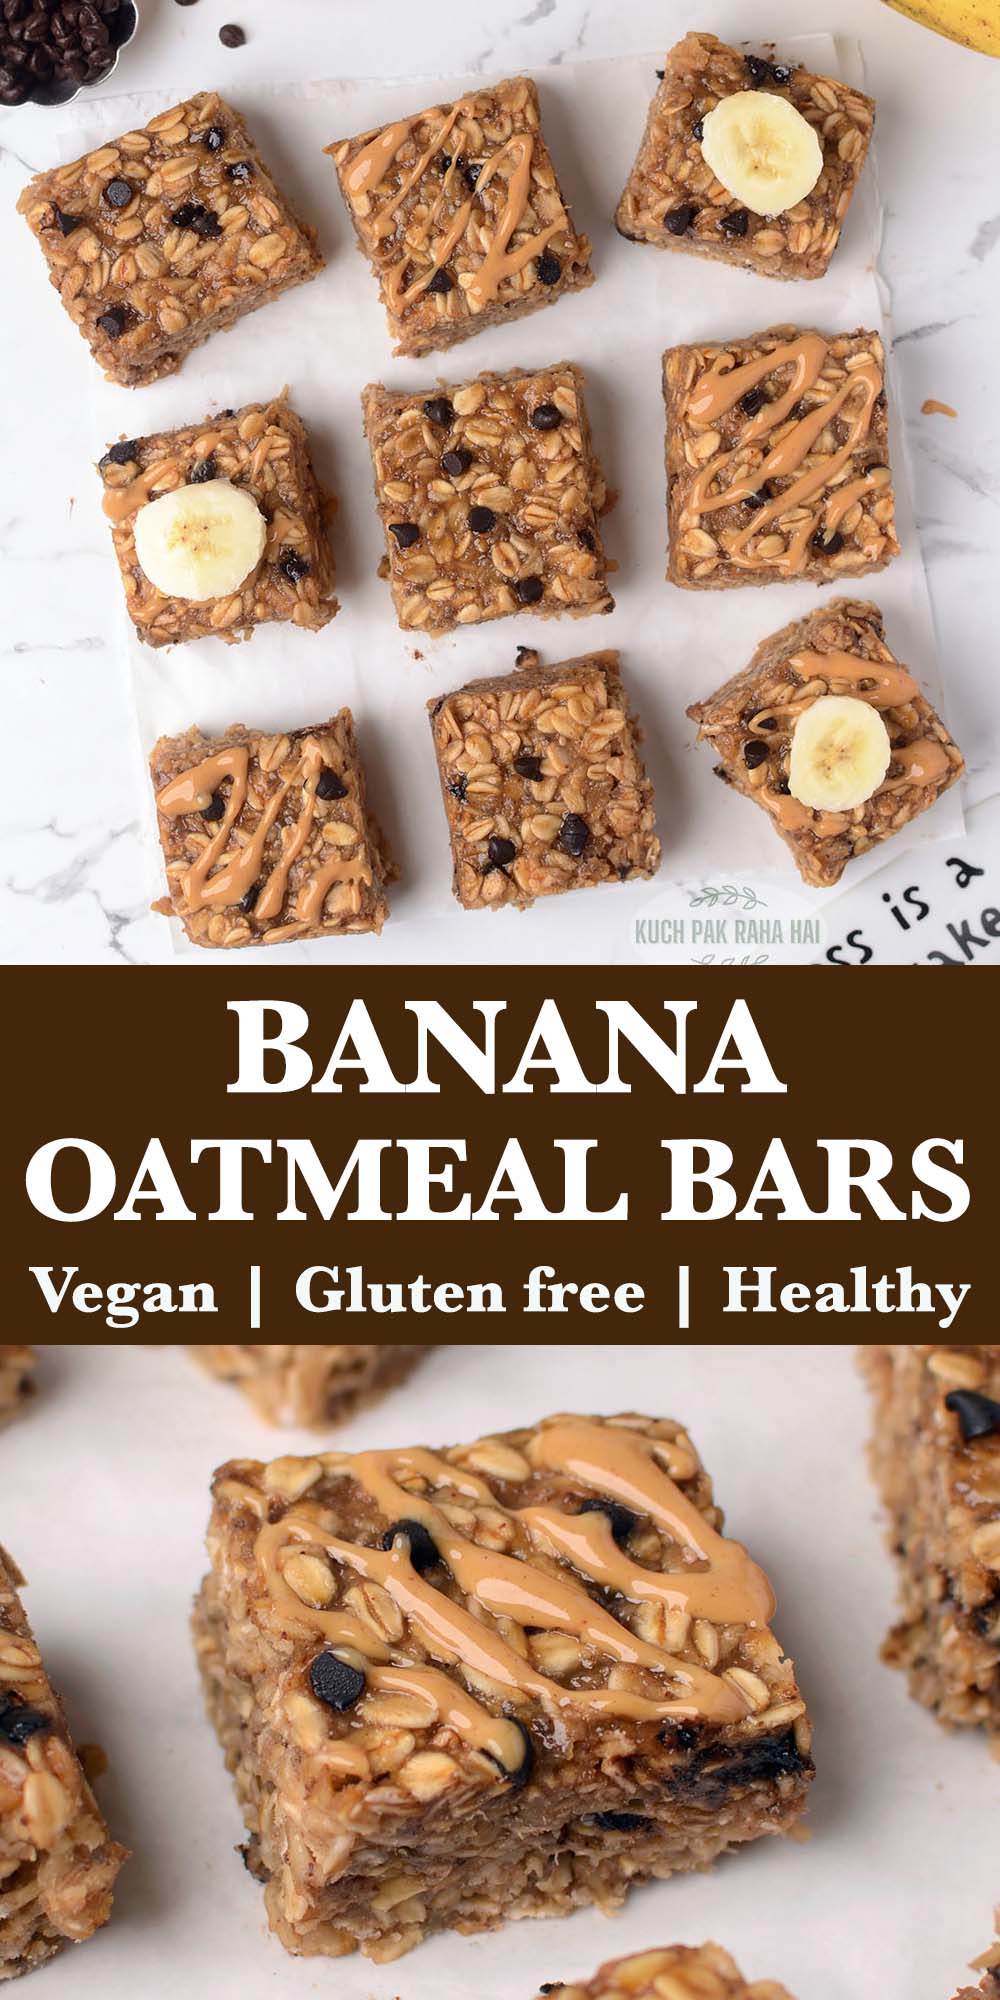 Banana oatmeal bars healthy breakfast.